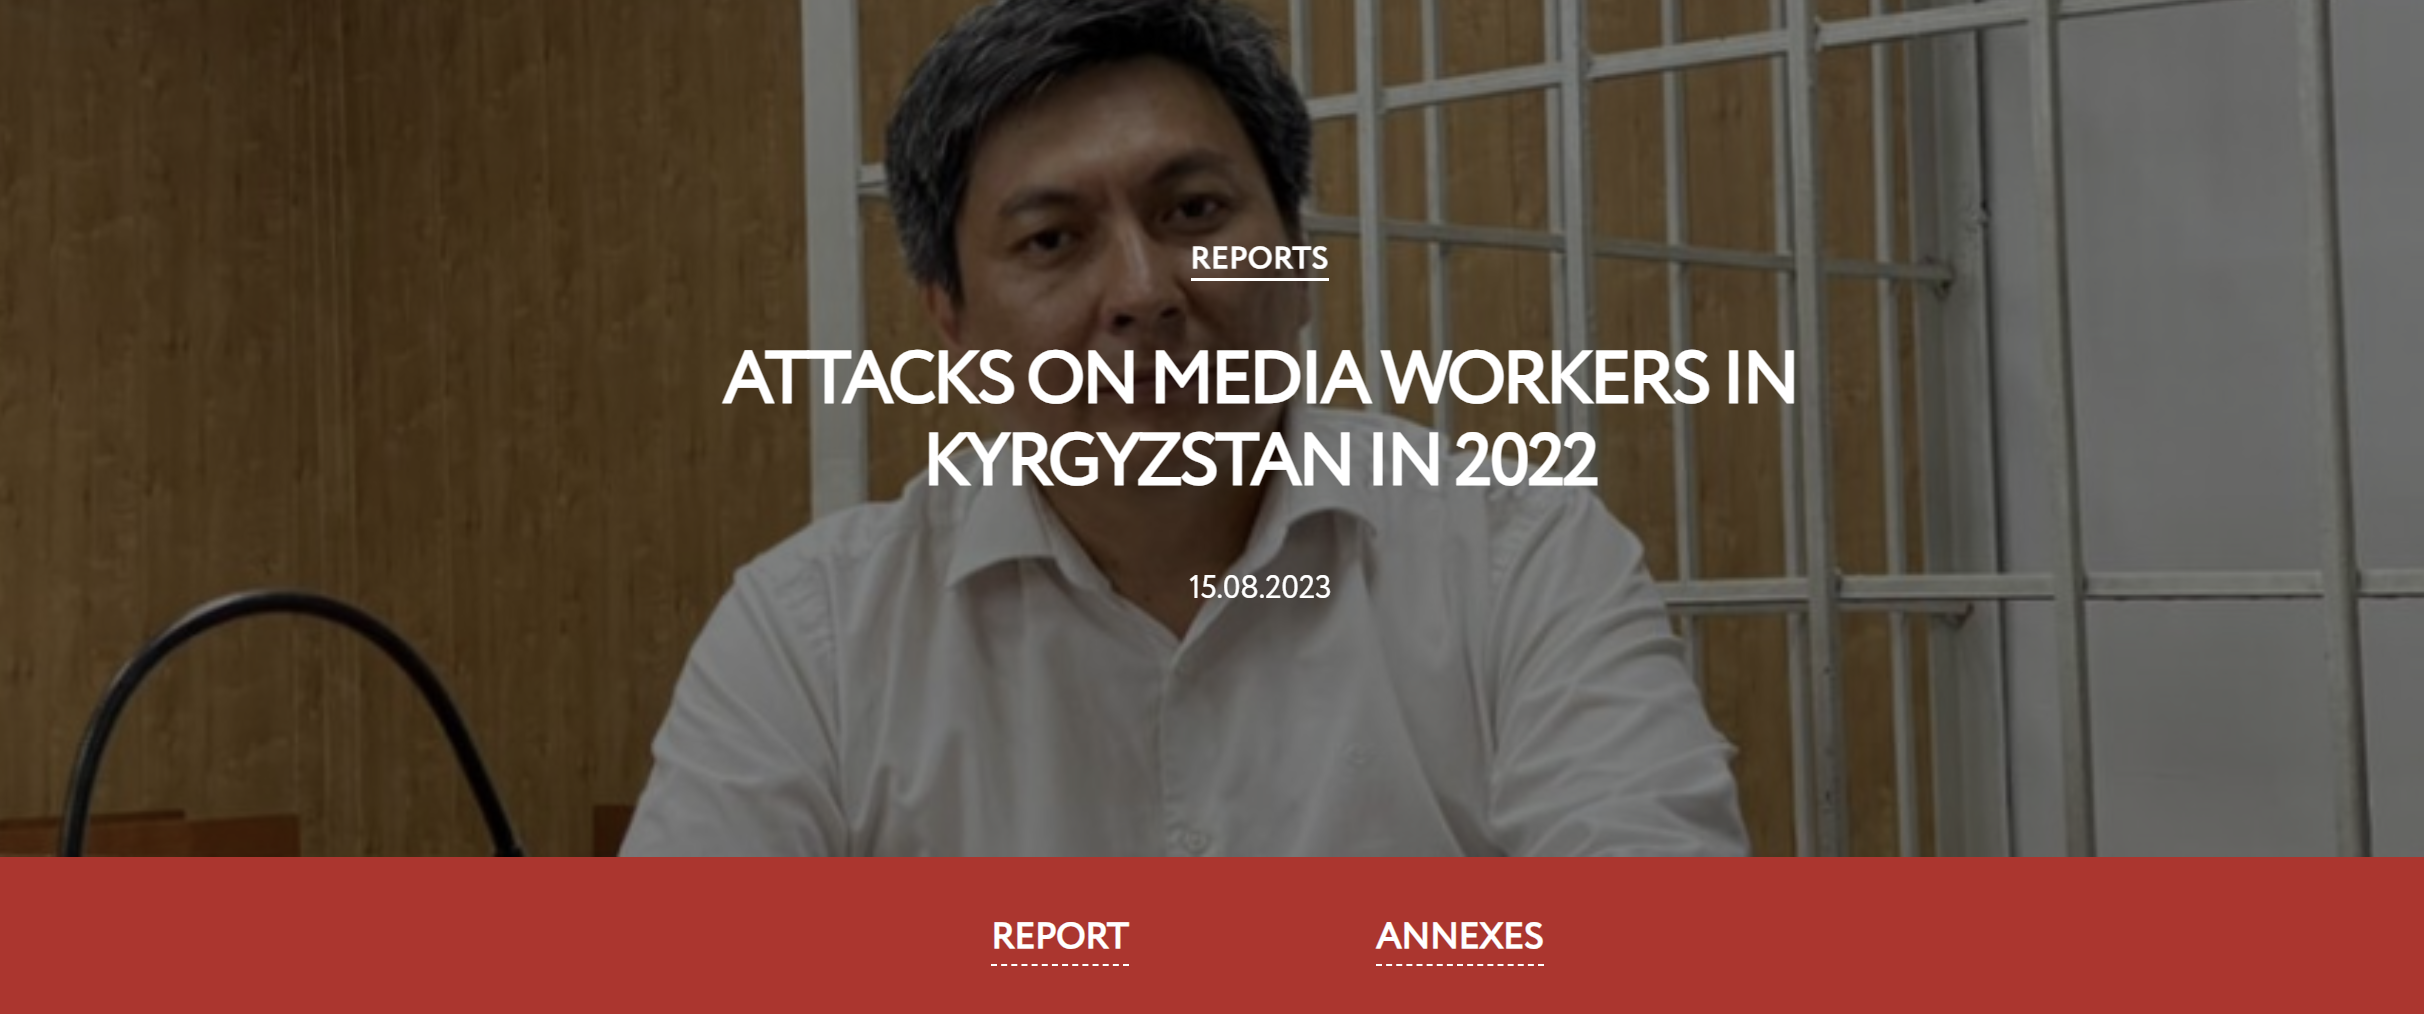 ATTACKS ON MEDIA WORKERS IN KYRGYZSTAN IN 2022